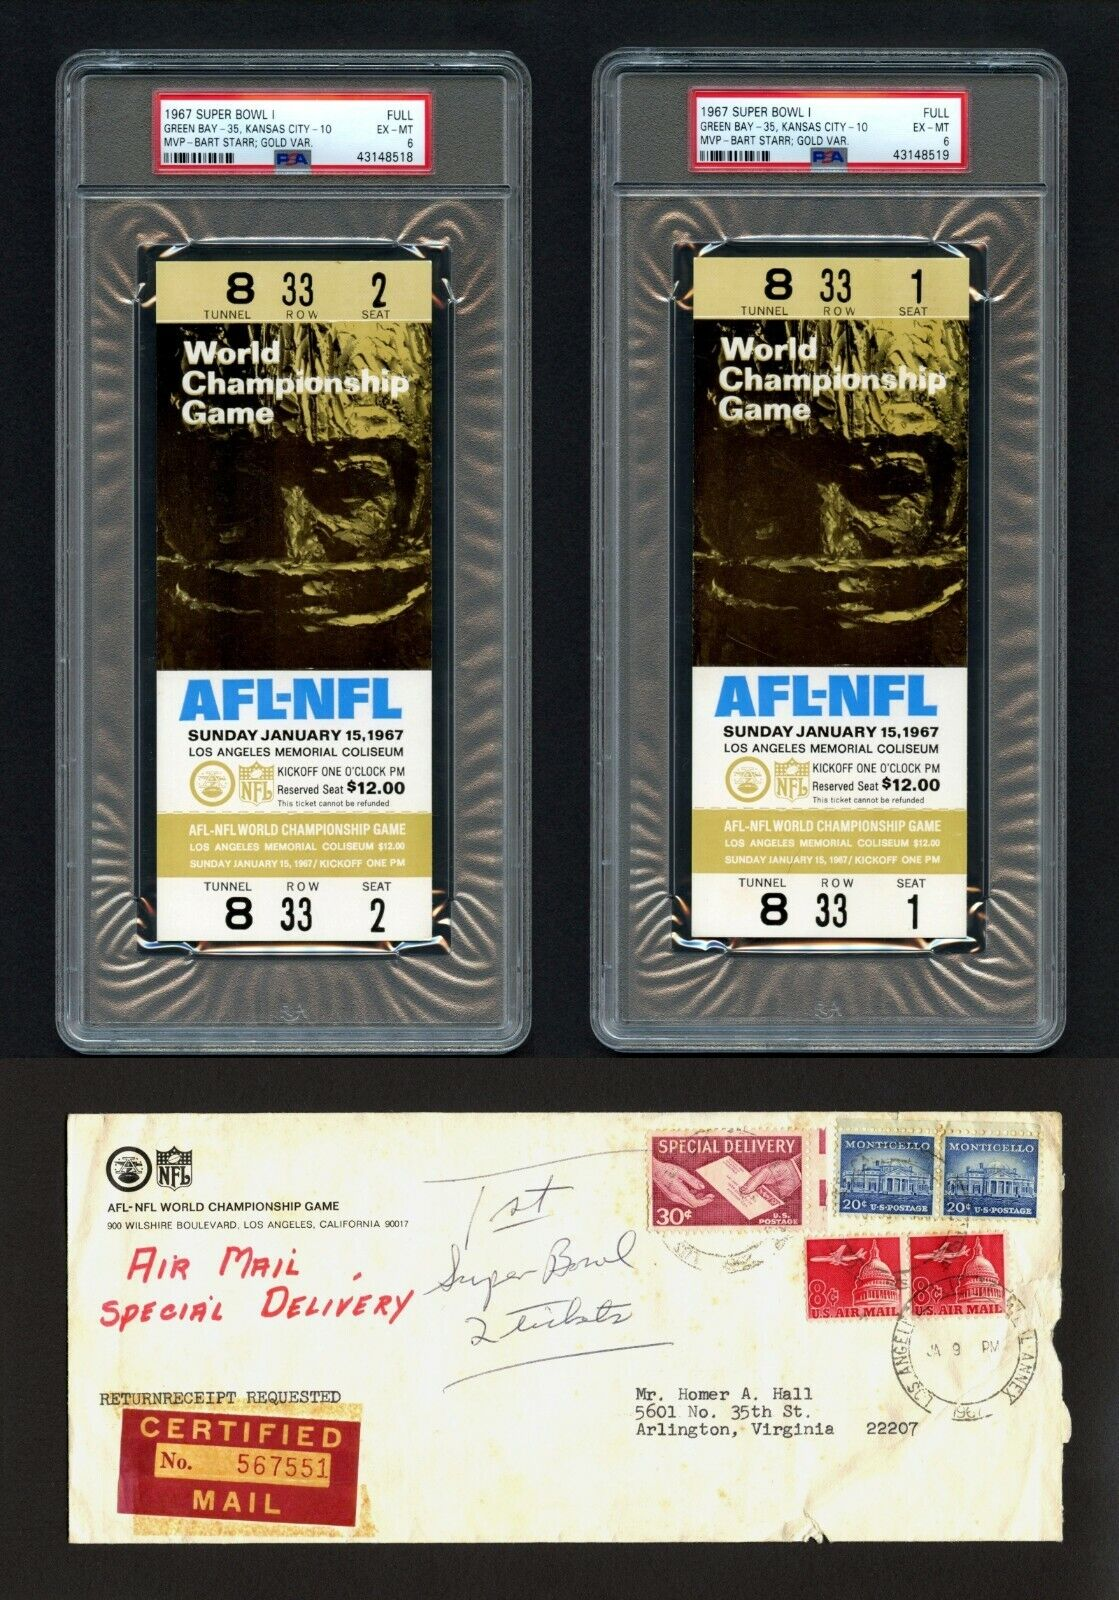 Most valuable Super Bowl Merch: 1967 SUPER BOWL 1 GOLD Tickets